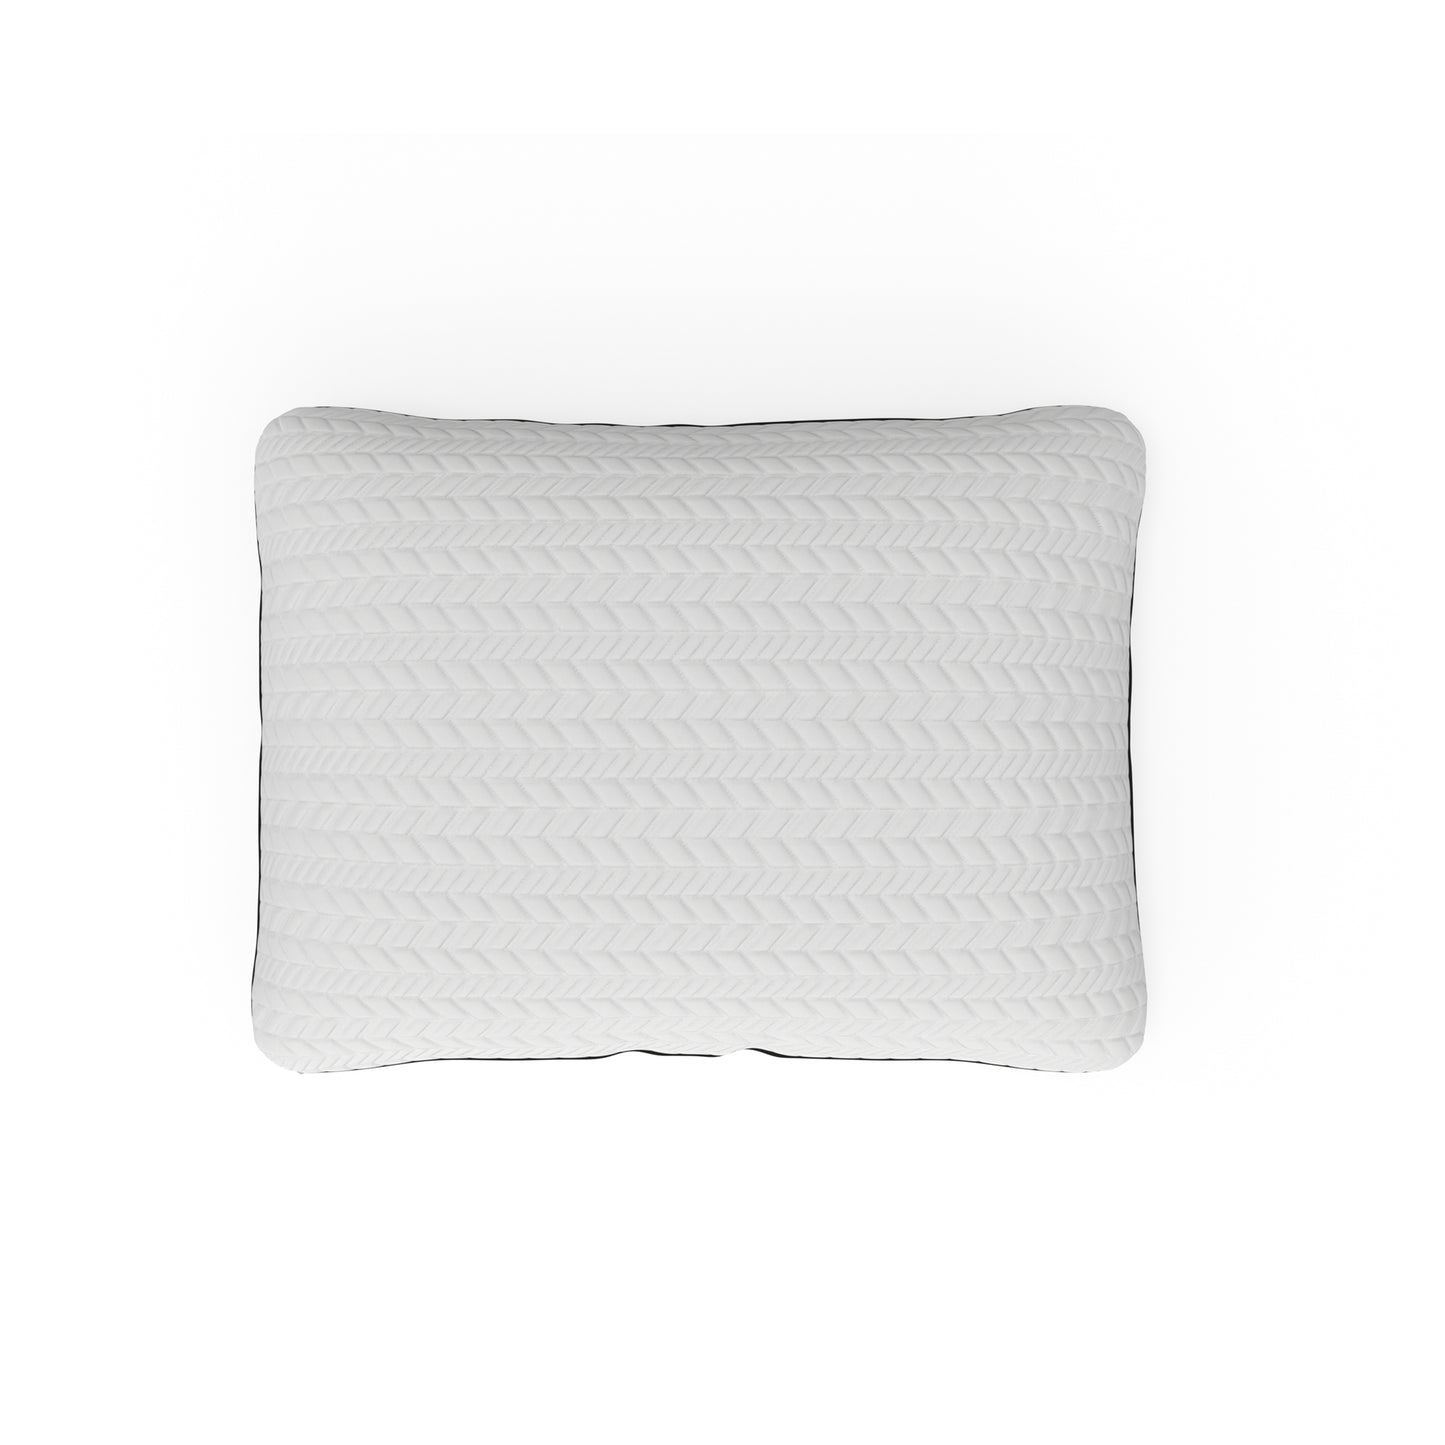 Reactive Shredded Memory Foam Pillow-Adjustable Loft Height